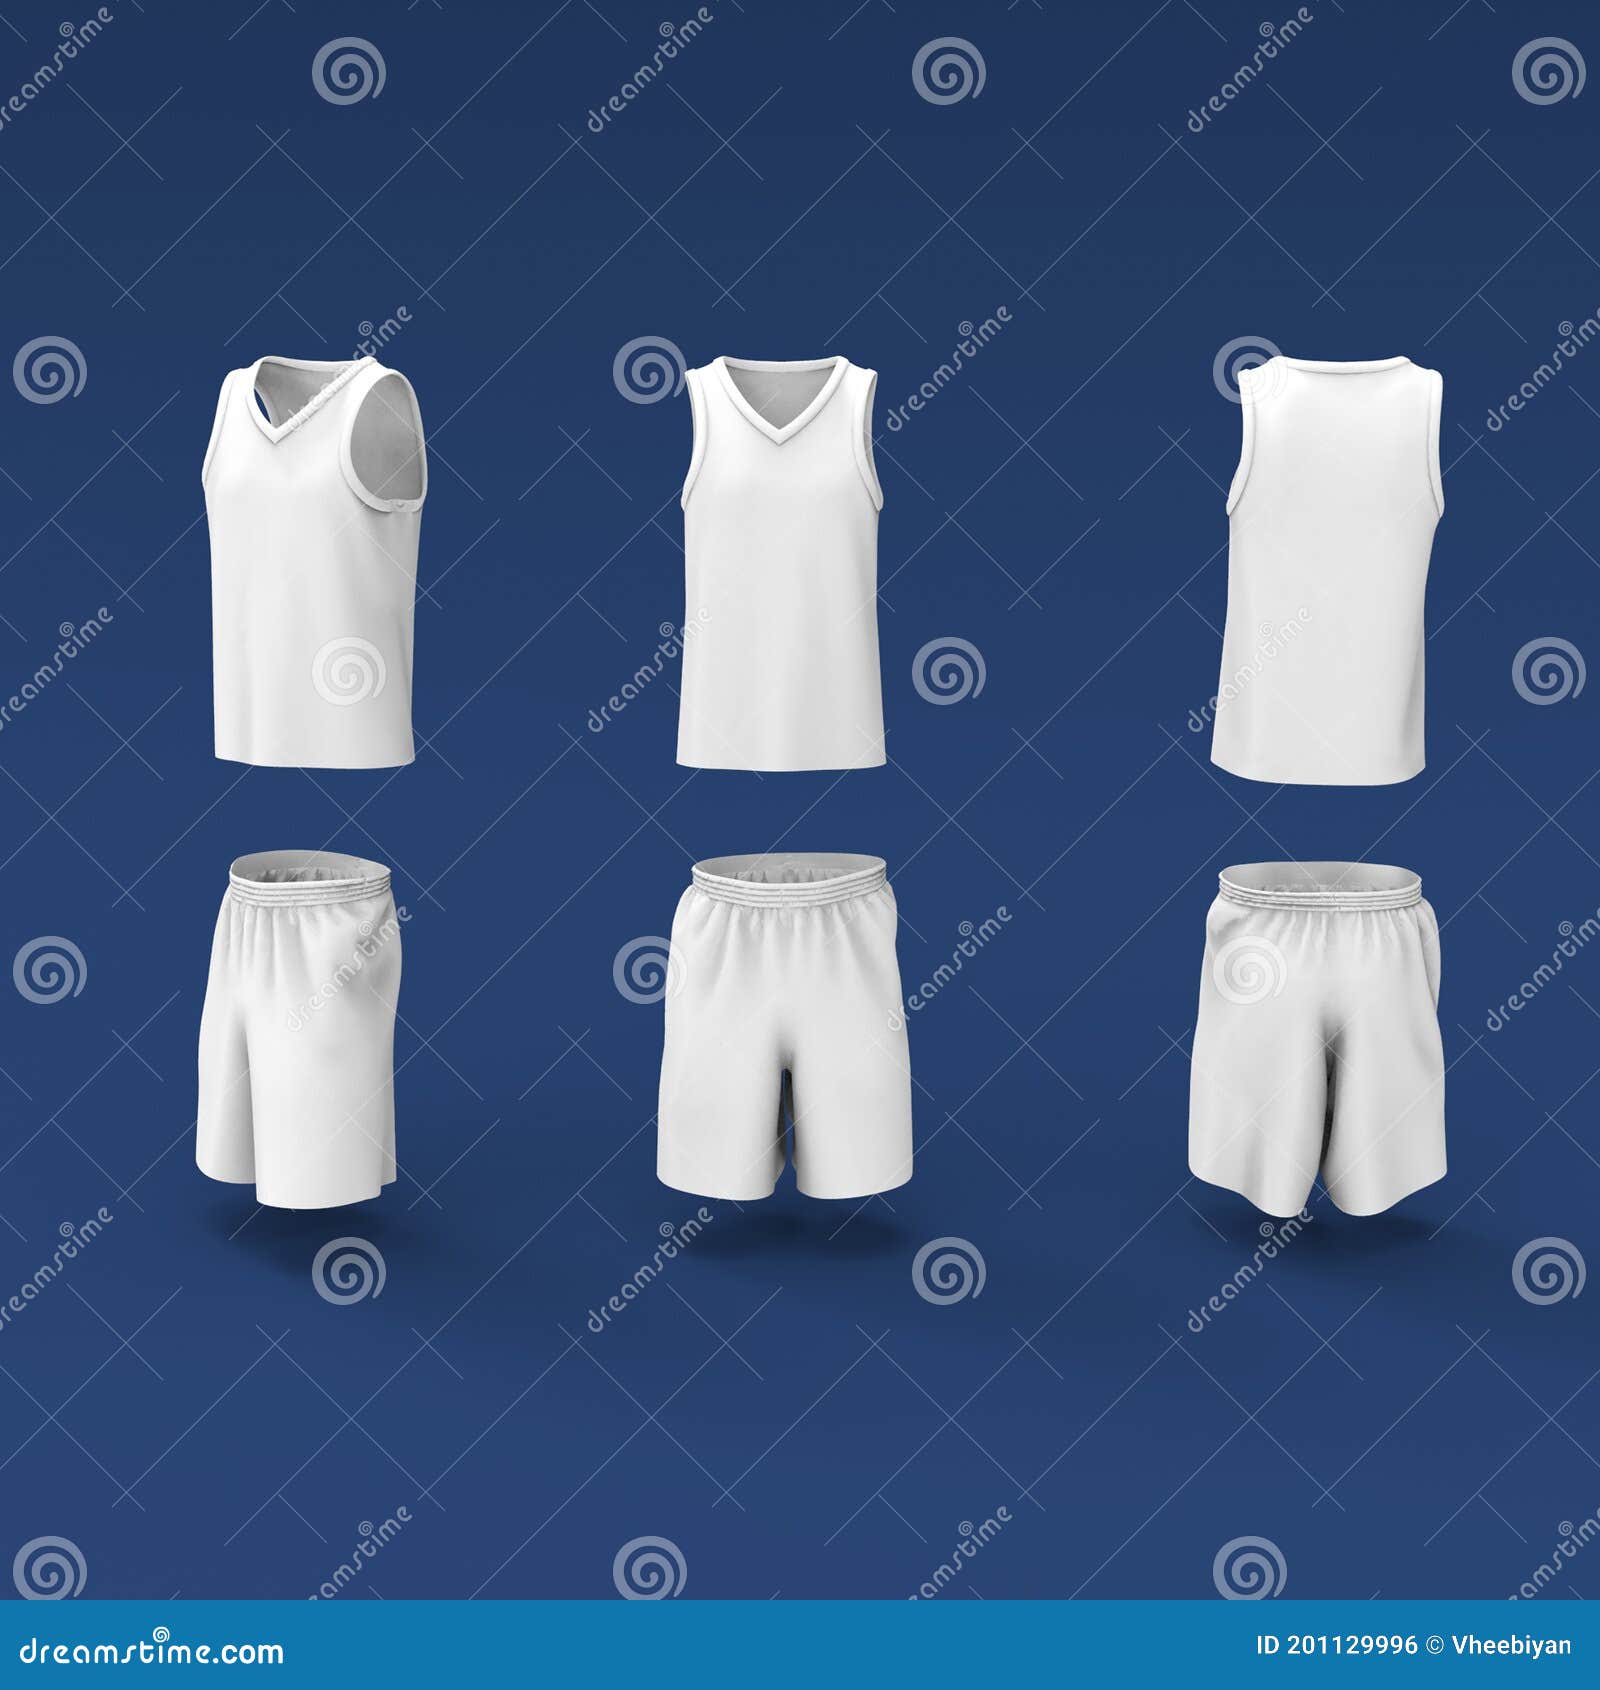 Basketball Uniform Template Design Tank Top Tshirt Mockup For